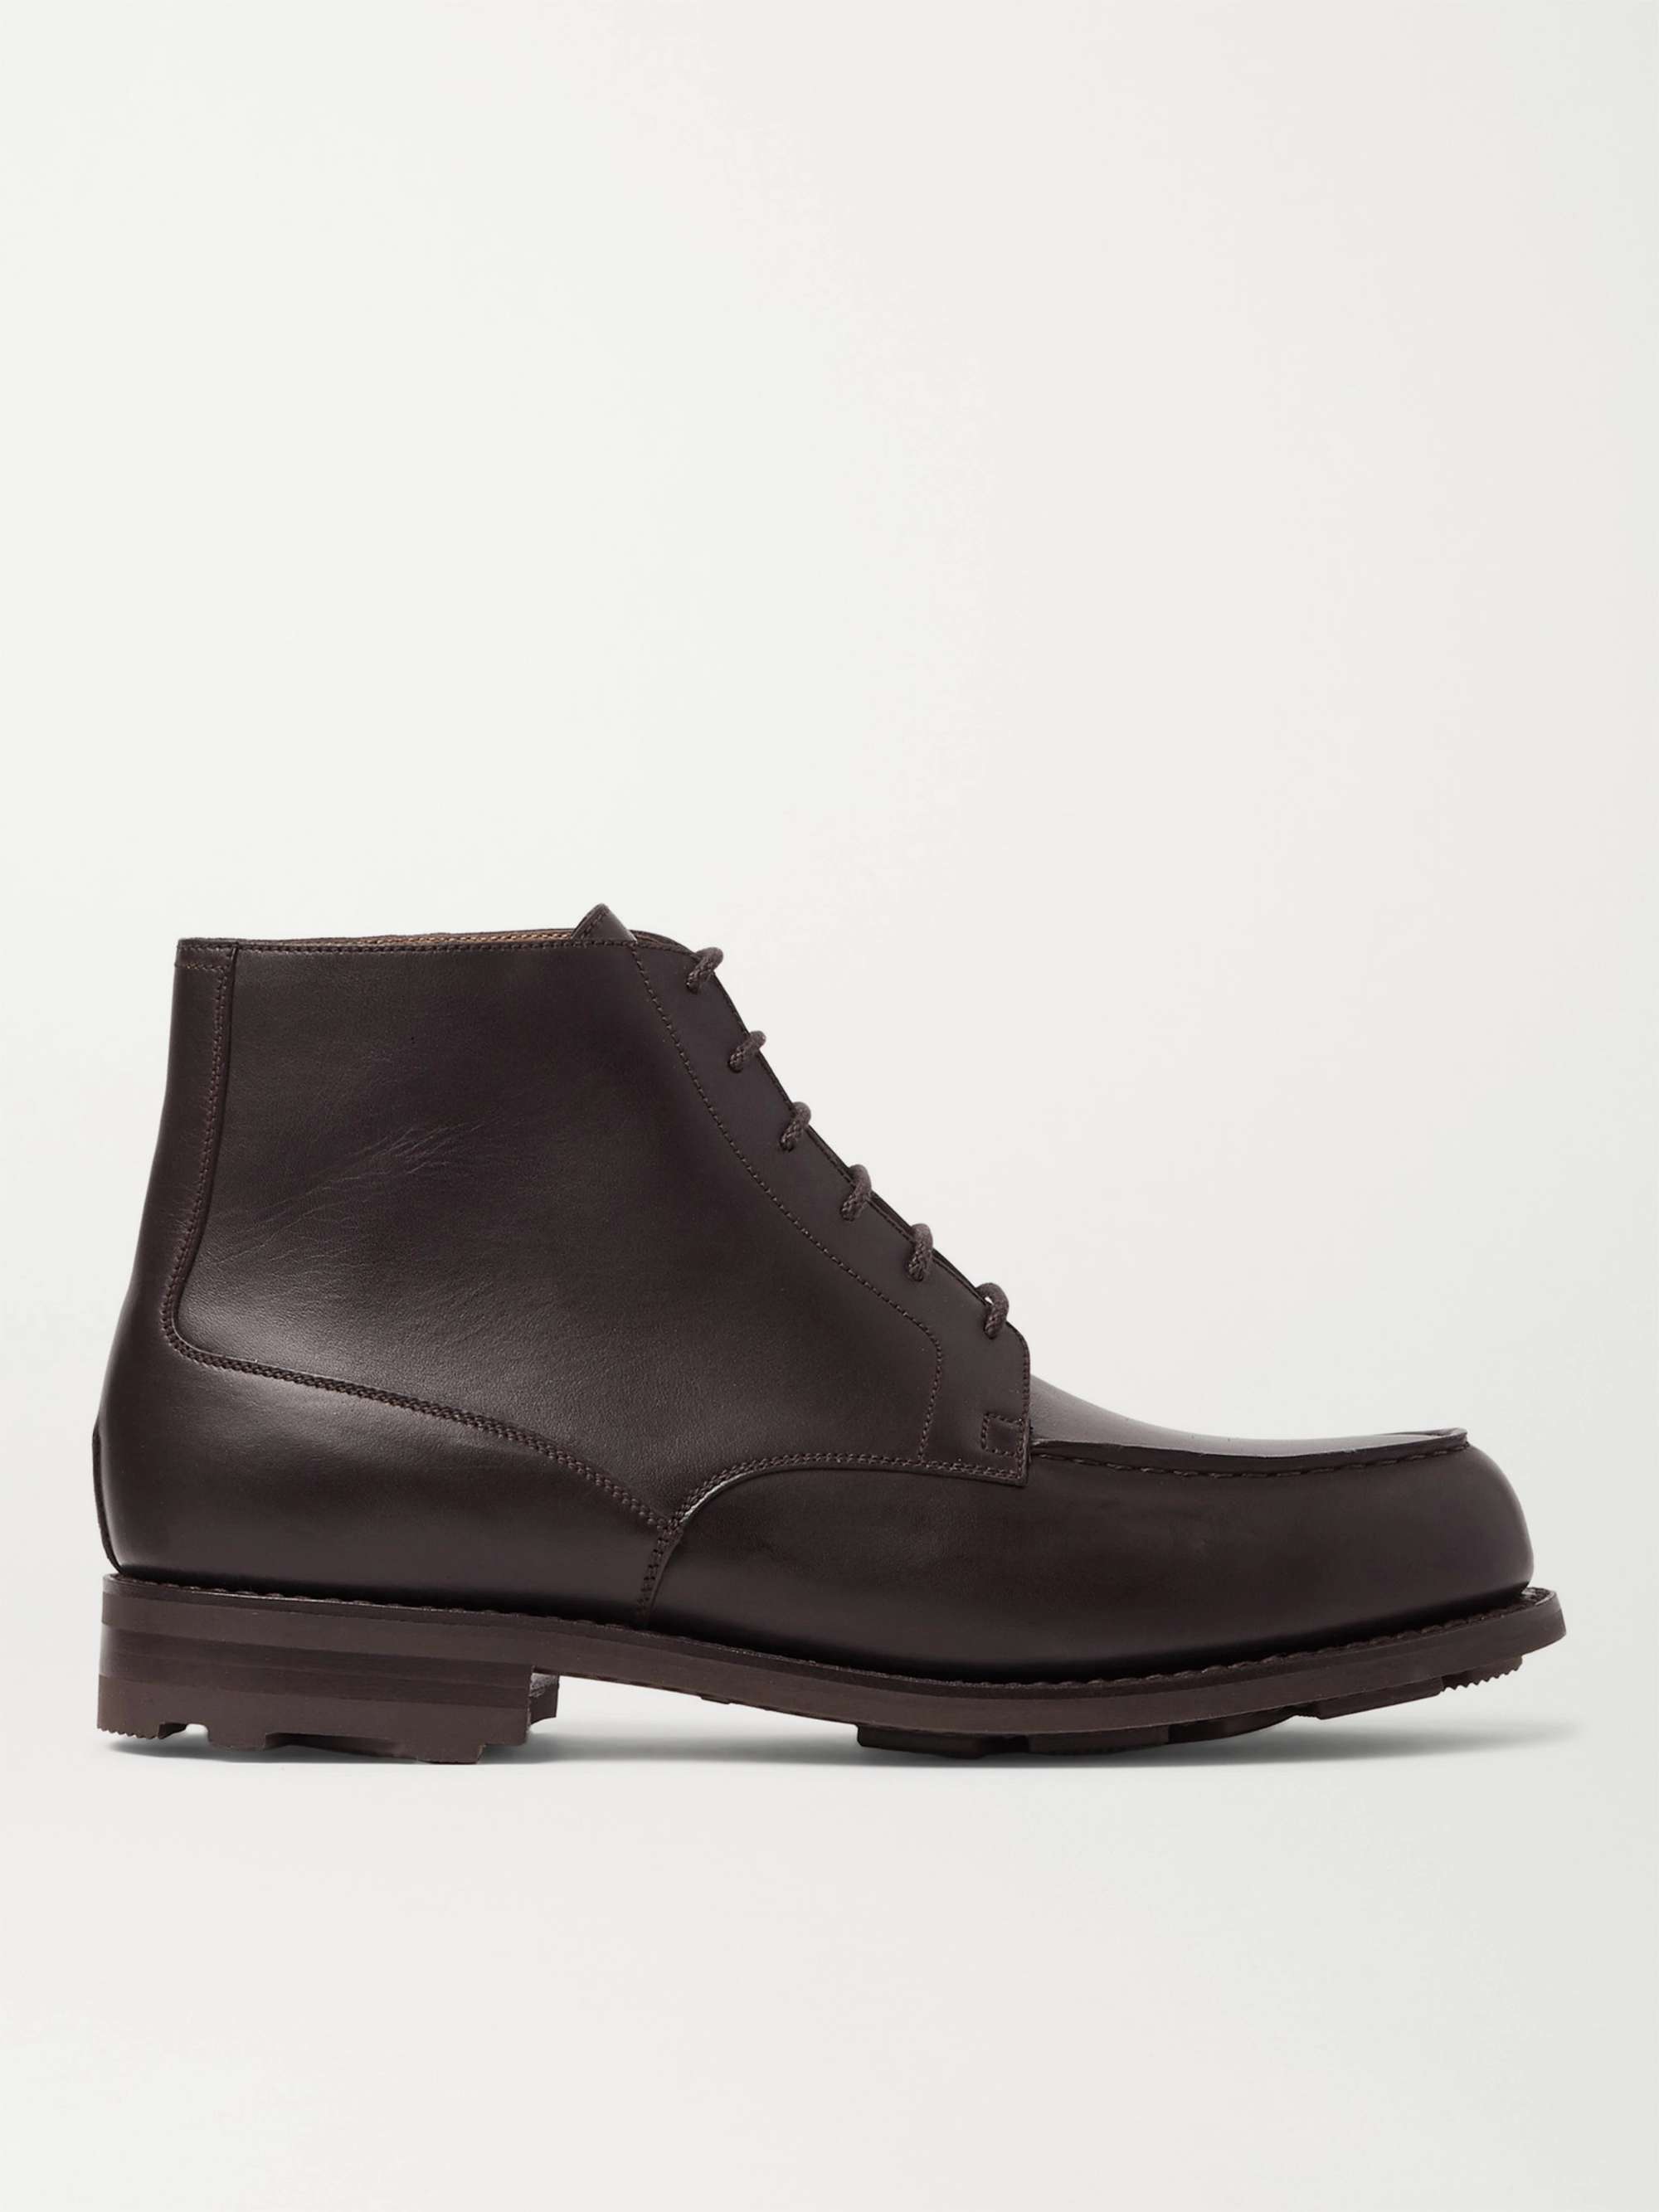 J.M. Weston Leather Derby Boots